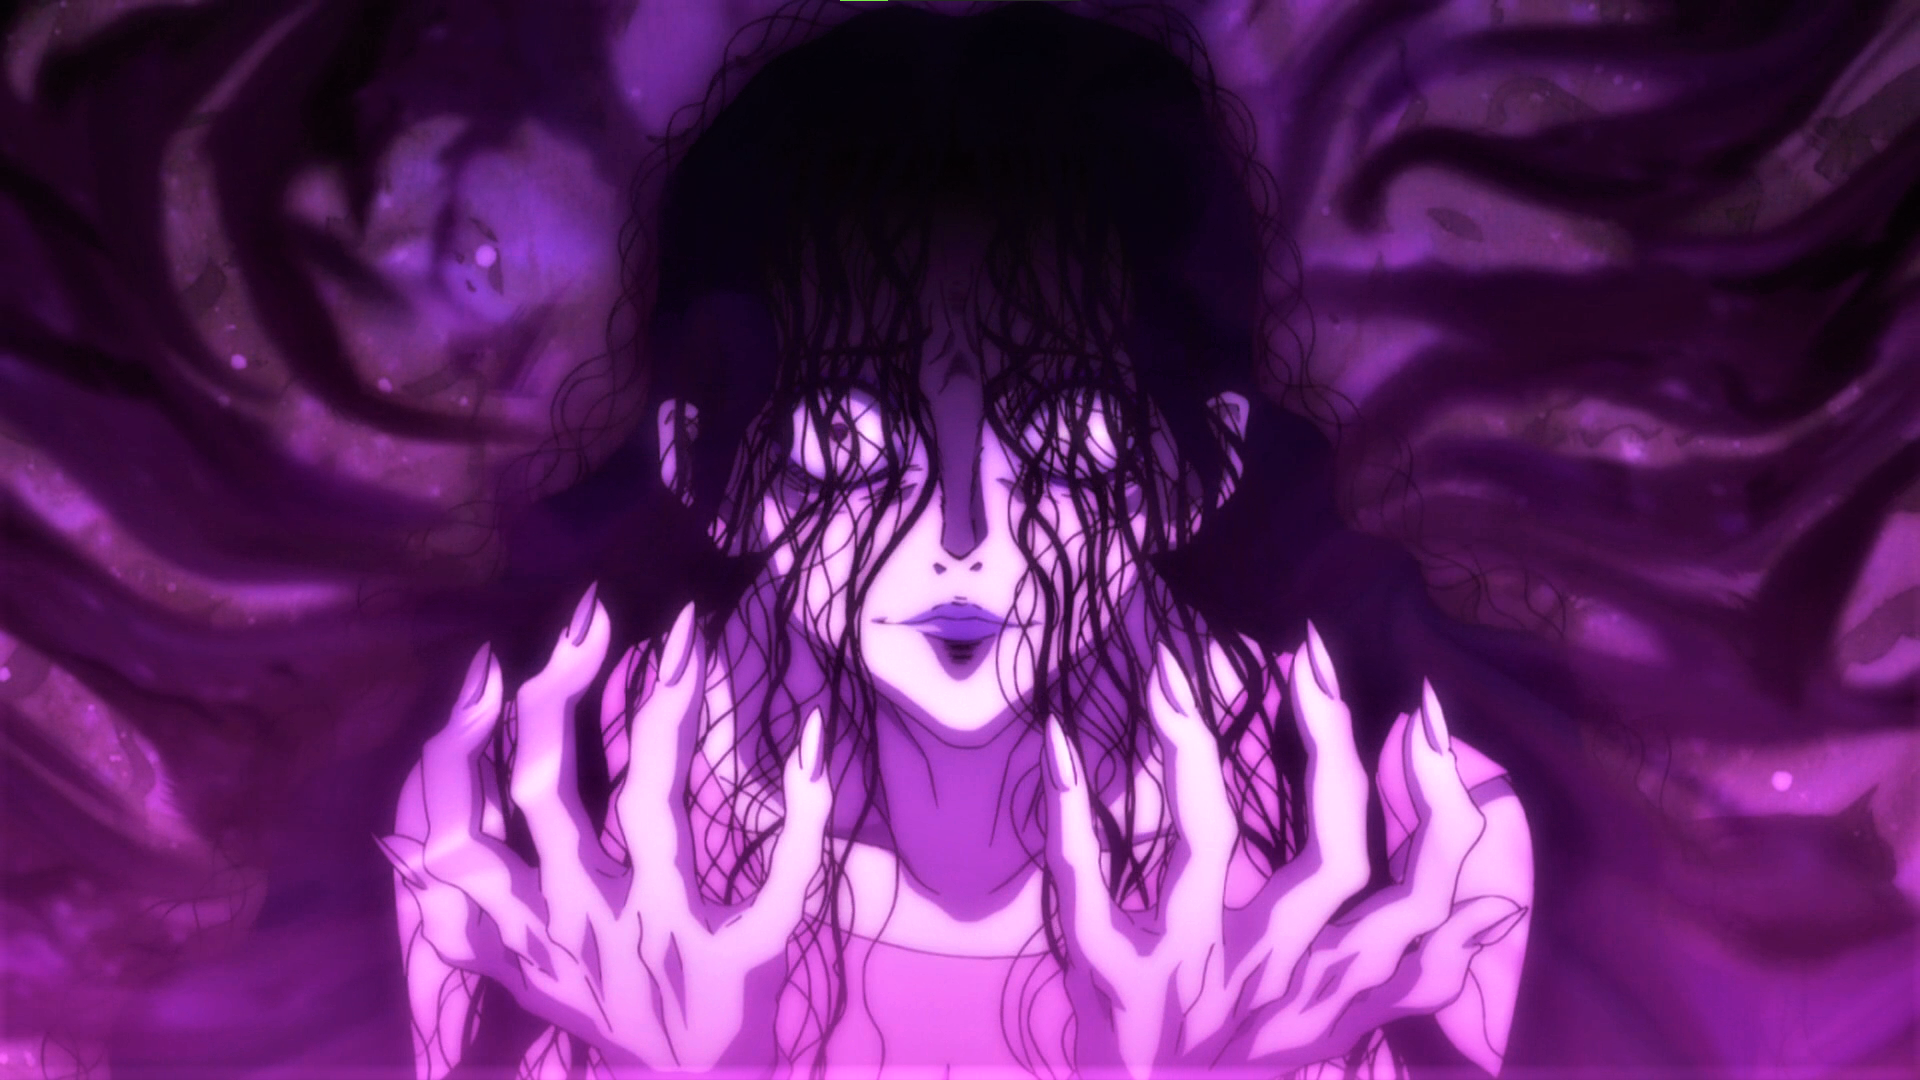 Anime 1920x1080 Hunter x Hunter hands messy hair purple long nails makeup anime Anime screenshot anime girls